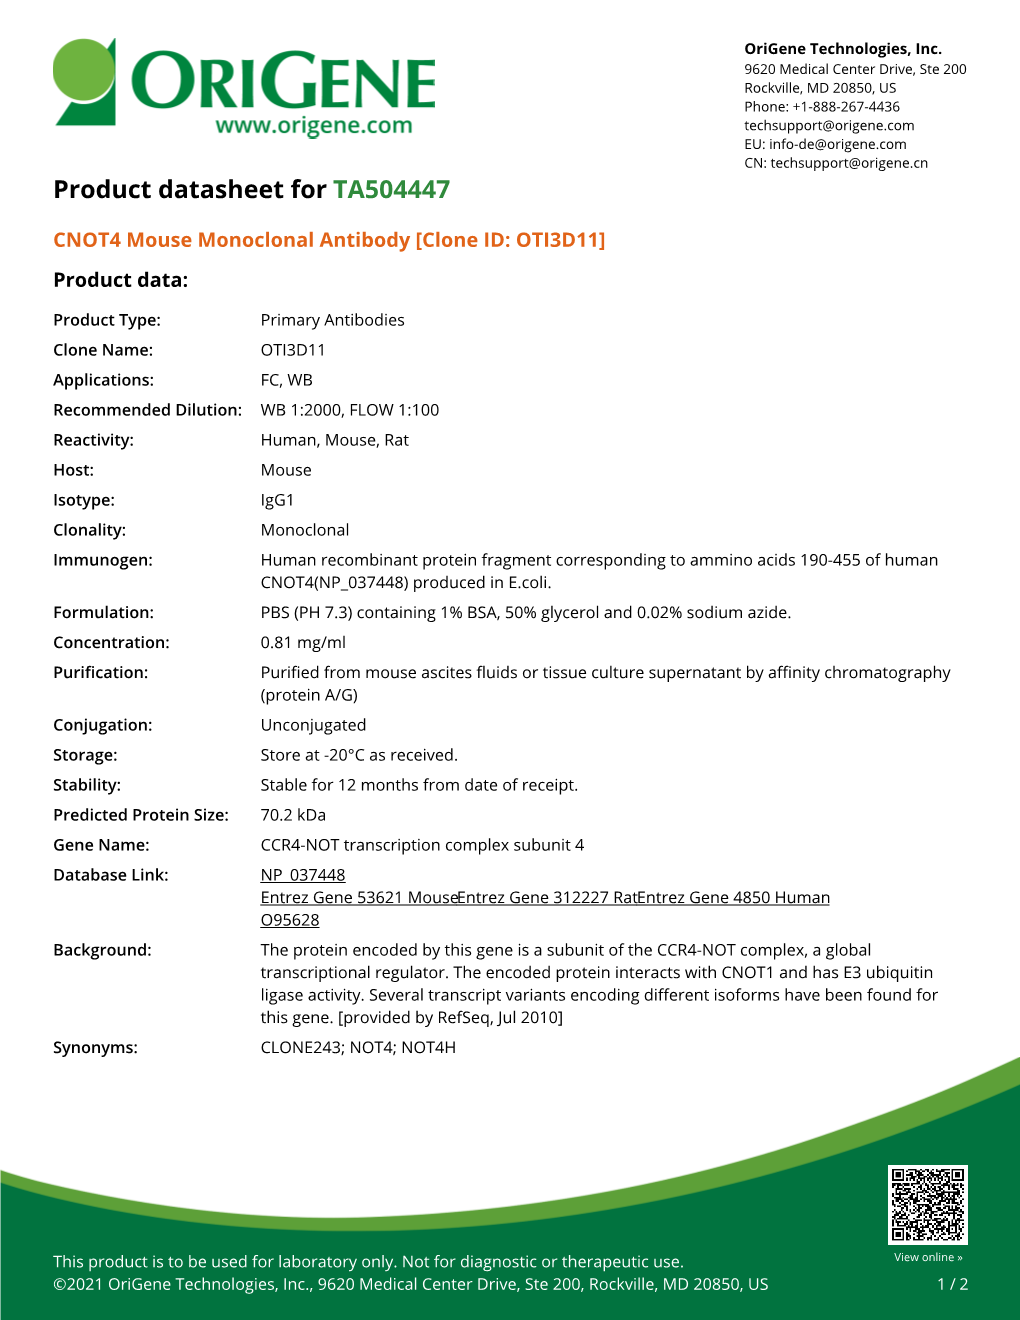 CNOT4 Mouse Monoclonal Antibody [Clone ID: OTI3D11] Product Data